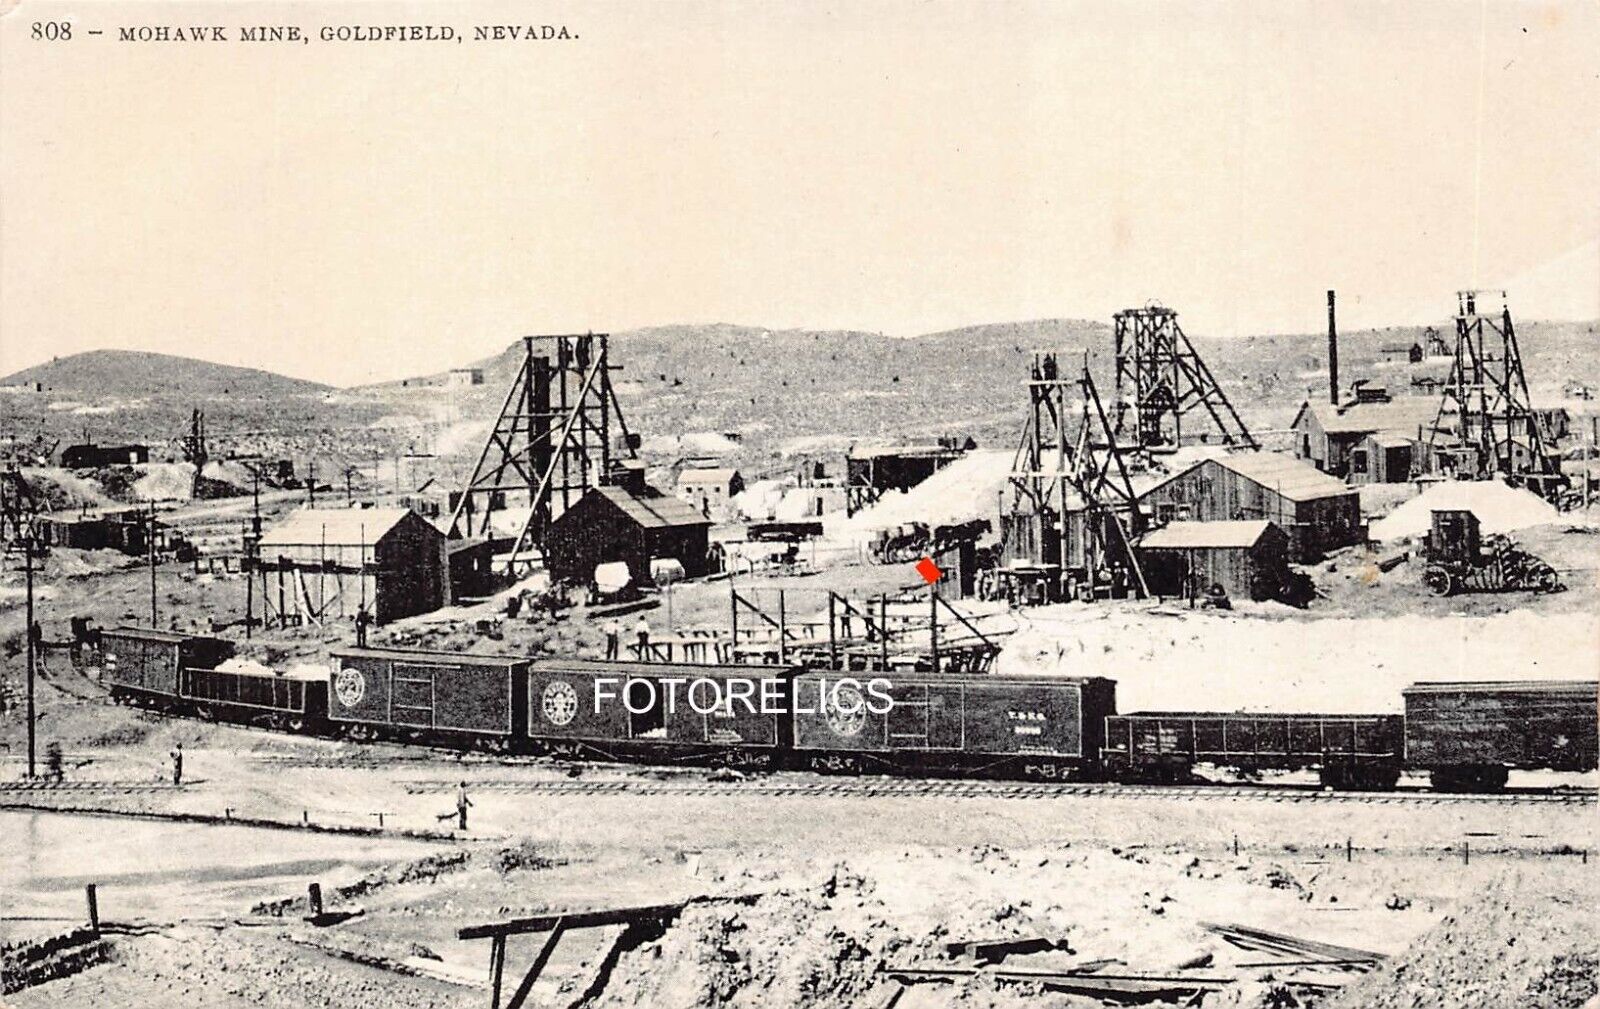 Mohawk Mine Goldfield Nevada - Early Mitchell Card